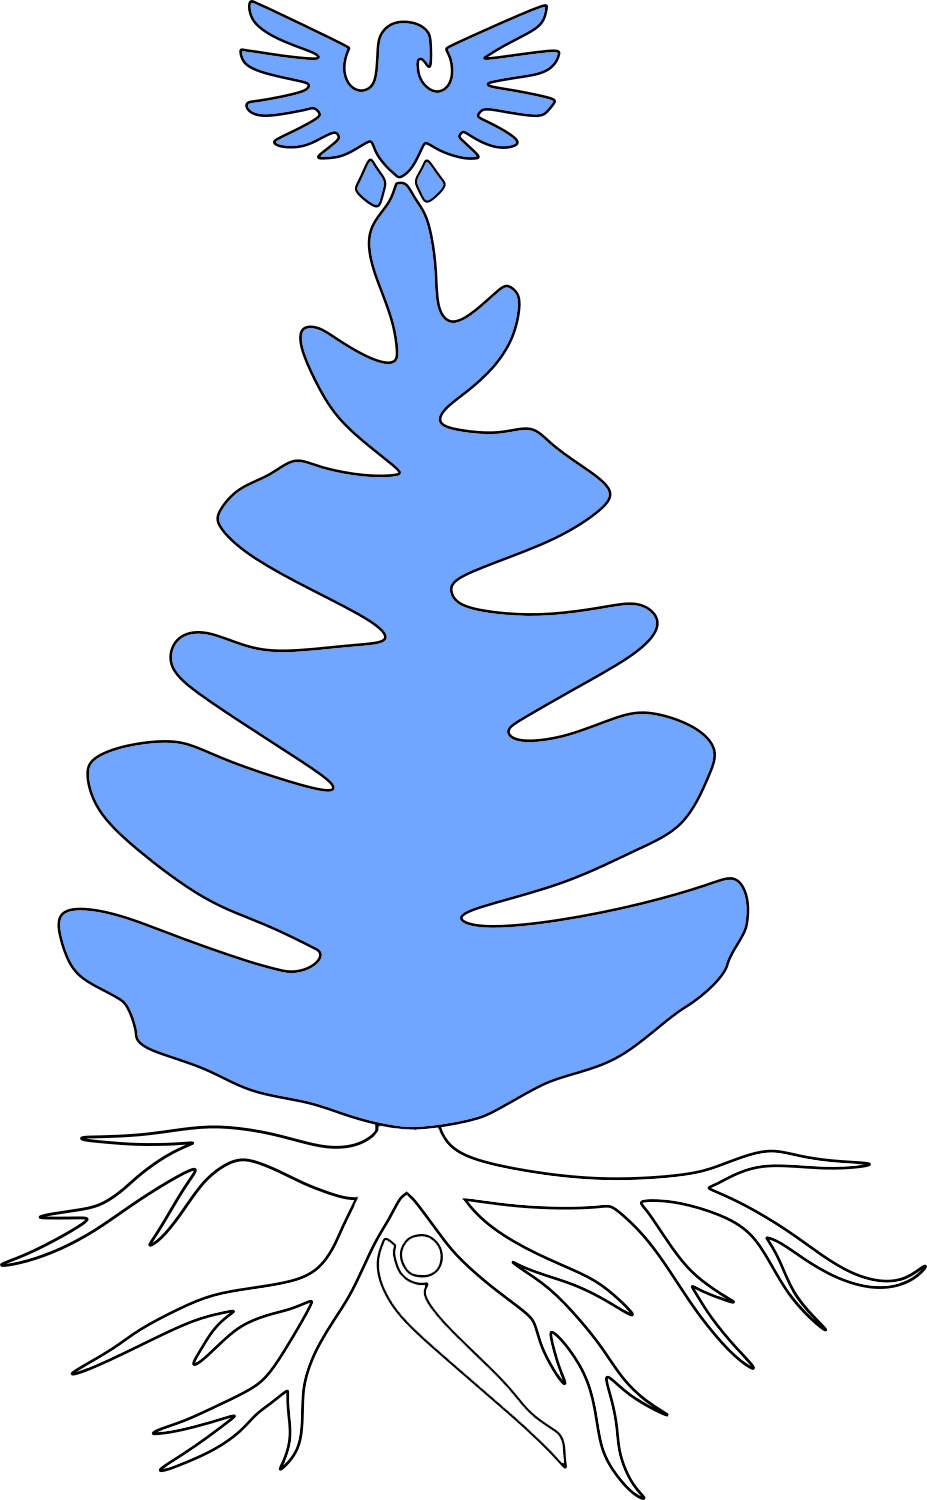 "blue tree of peace"